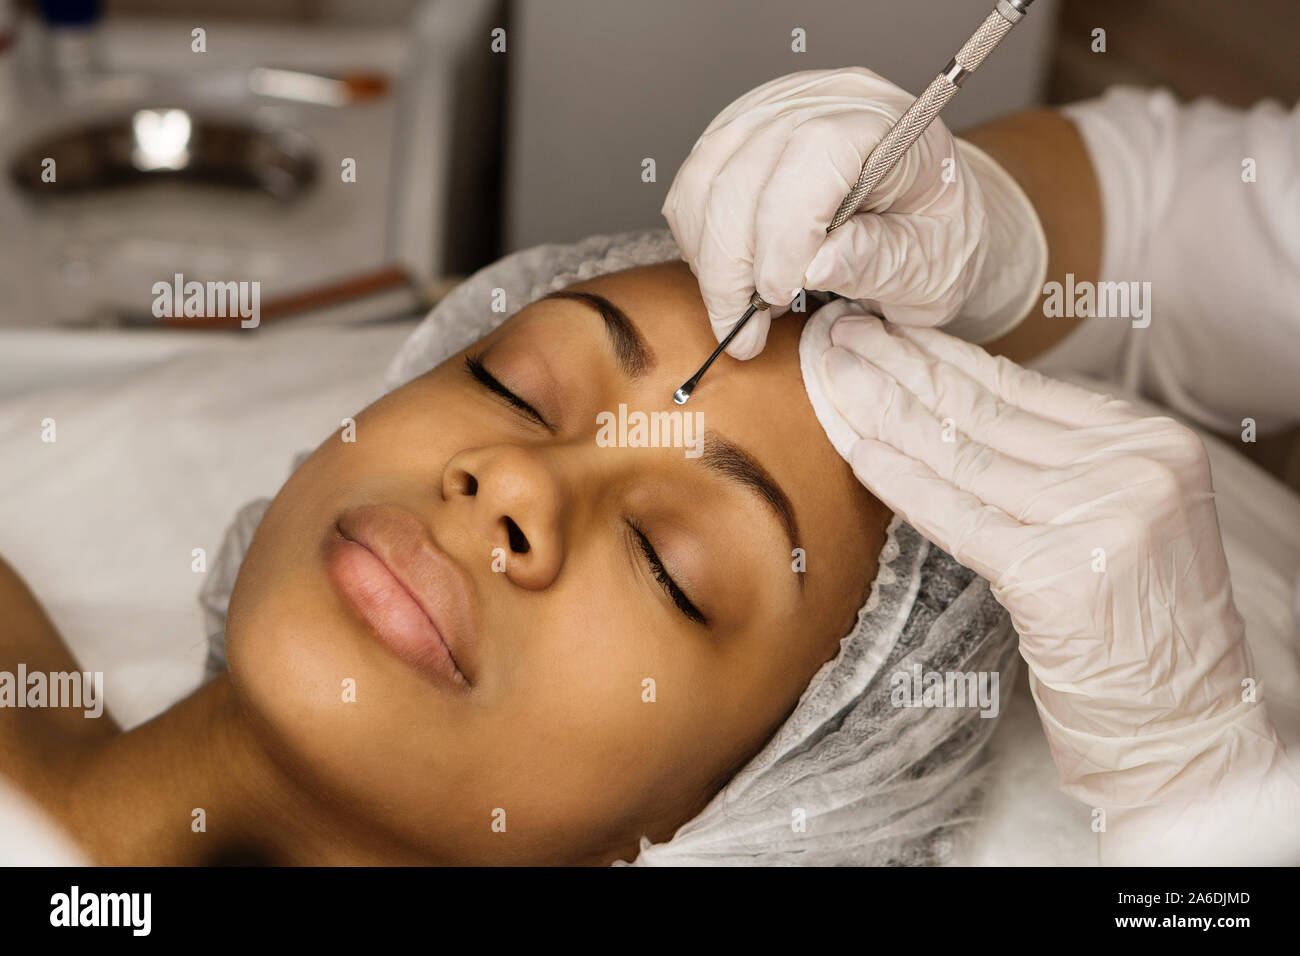 Tratamientos de belleza para hombres: Limpieza facial básica paso a paso -  Bekia Belleza